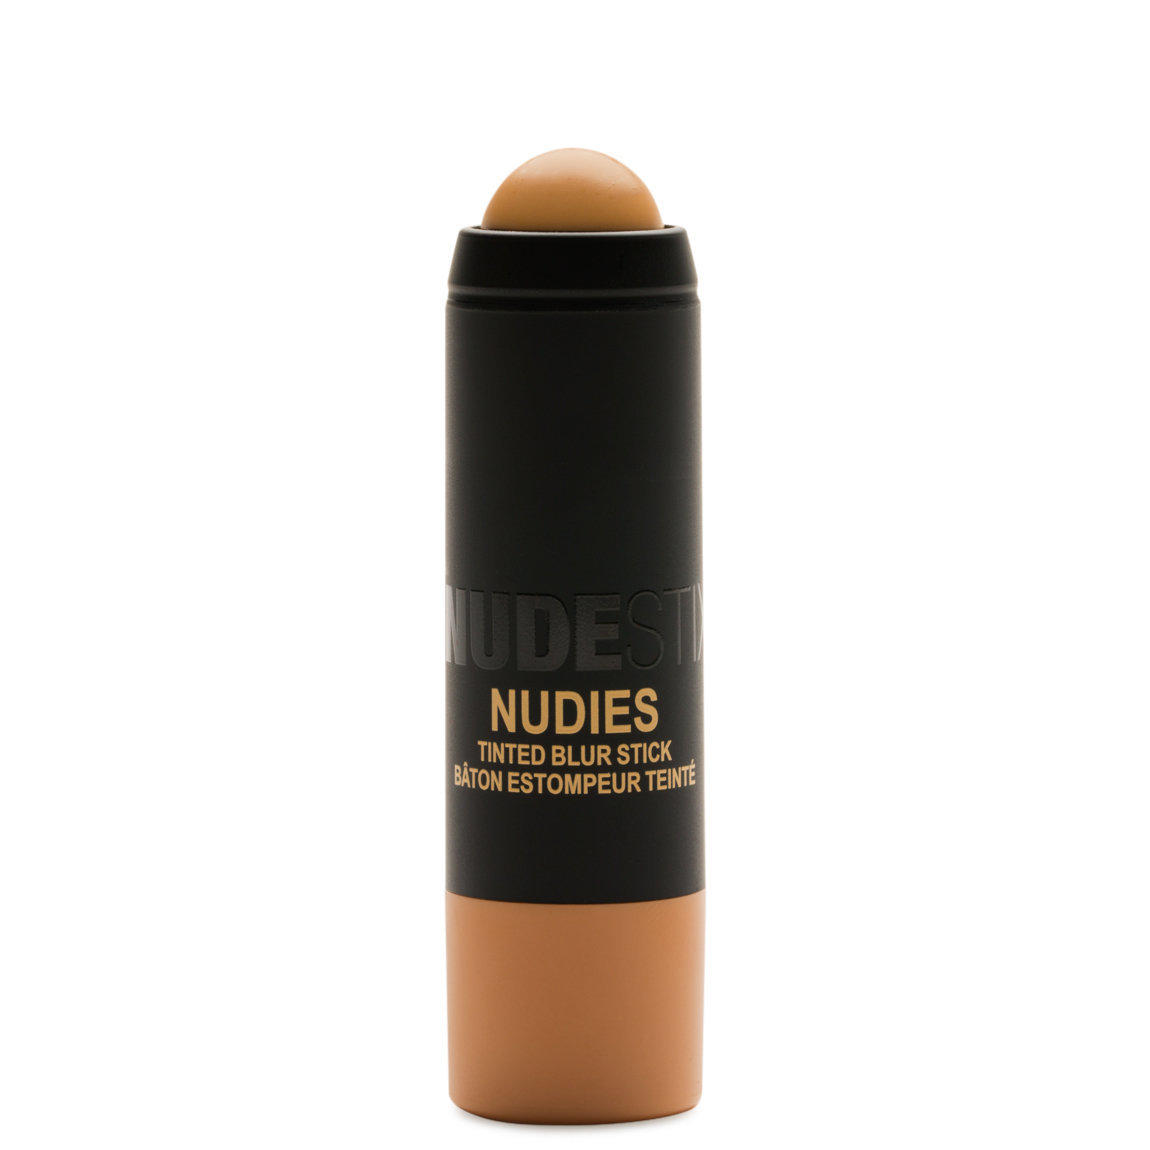 NudeStix Nudies Tinted Blur Stick Medium 7